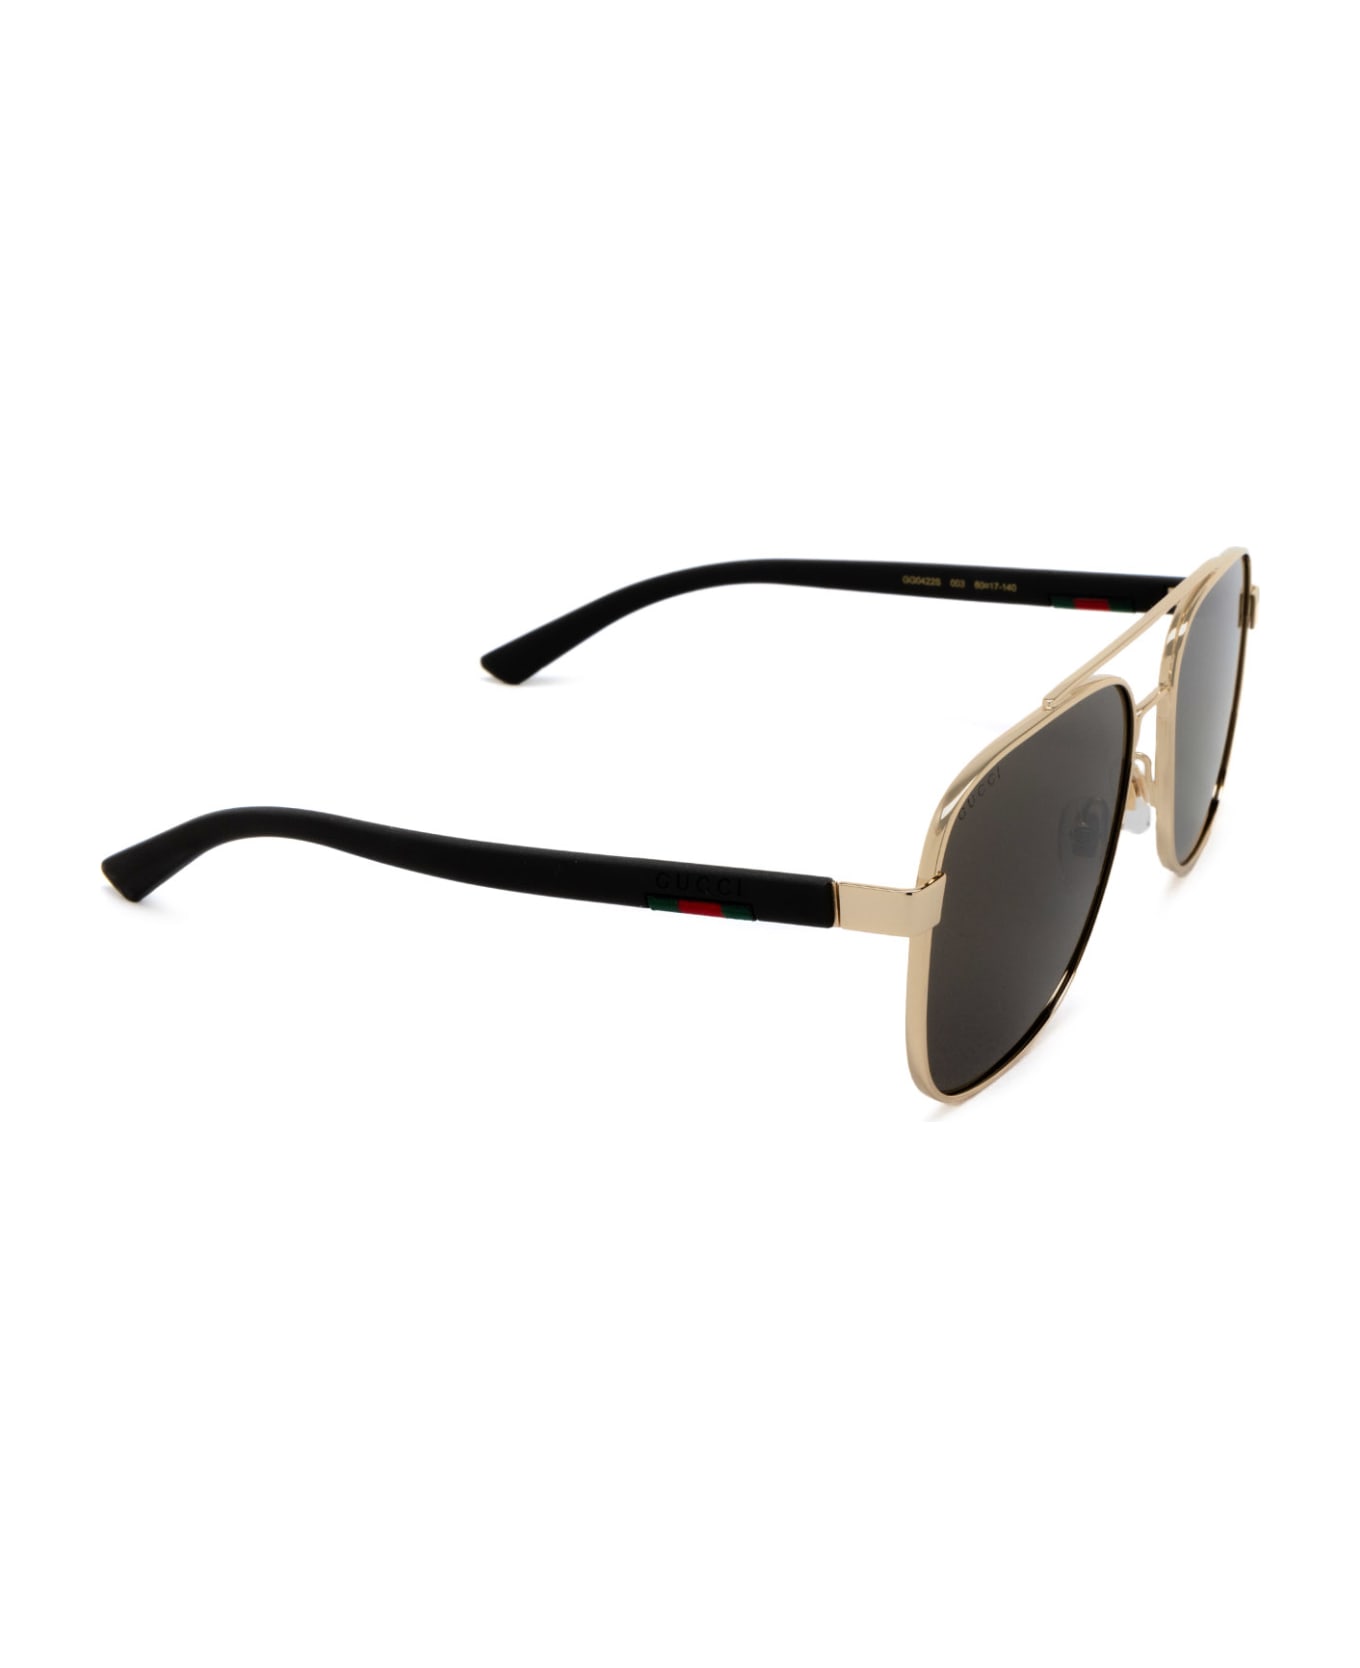 Gucci Eyewear Gg0422s Gold Sunglasses - Gold